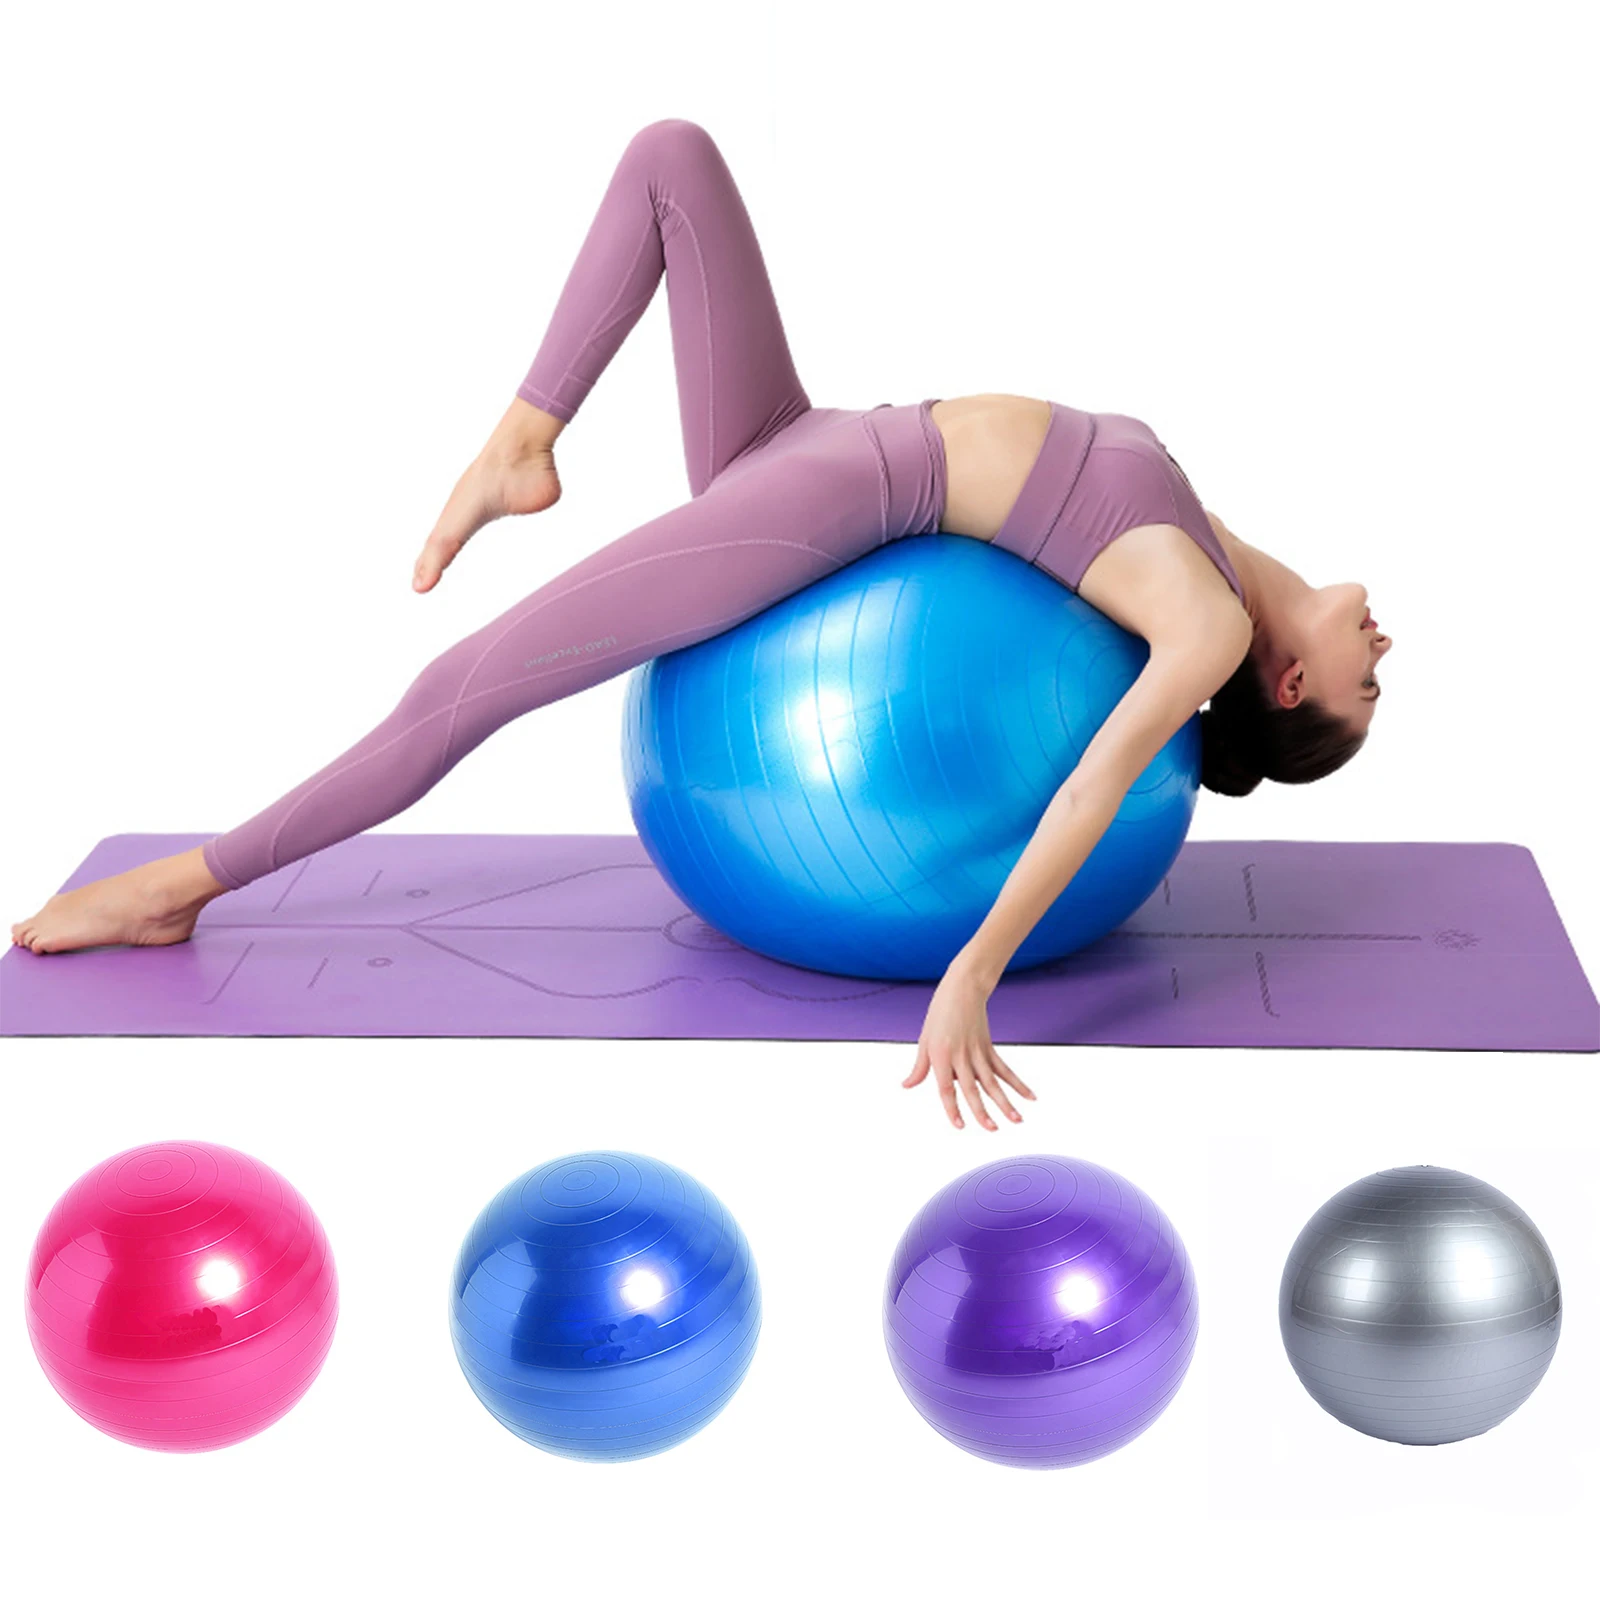 

Yoga Ball 45/55/65/75cm Fitness Balls Sports Pilates Birthing Fitball Exercise Training Workout Massage Ball Gym Yoga Ball Aids